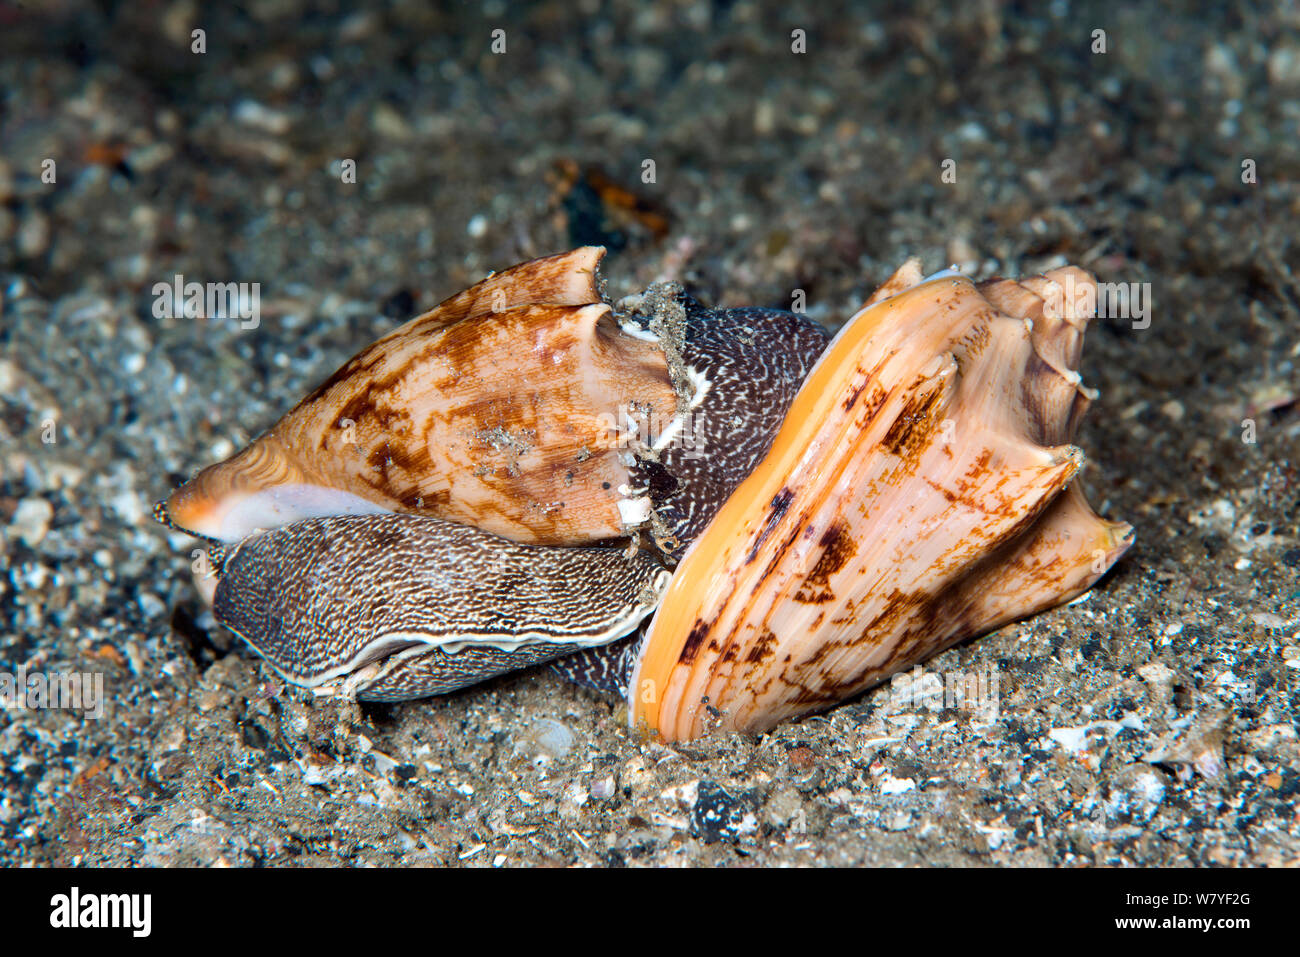 Bat volute predatory sea snails (Cymbiola vespertilio) mating, Lembeh Strait, North Sulawesi, Indonesia. Stock Photo